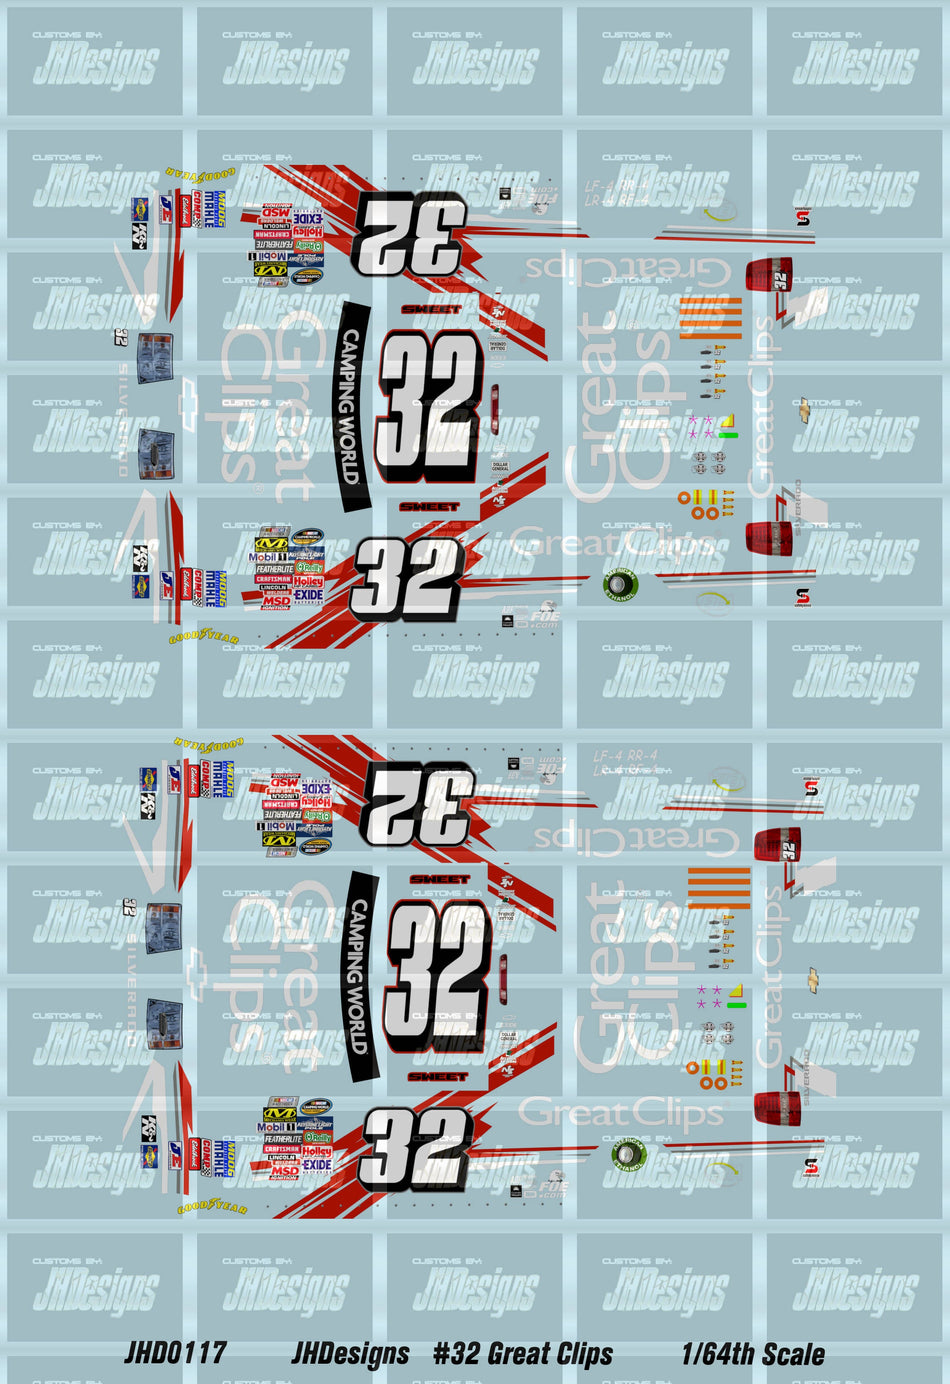 JH Designs Brad Sweet 2011 CWTS #32 Great Clips (Daytona) 1:64 Racecar Decal Set